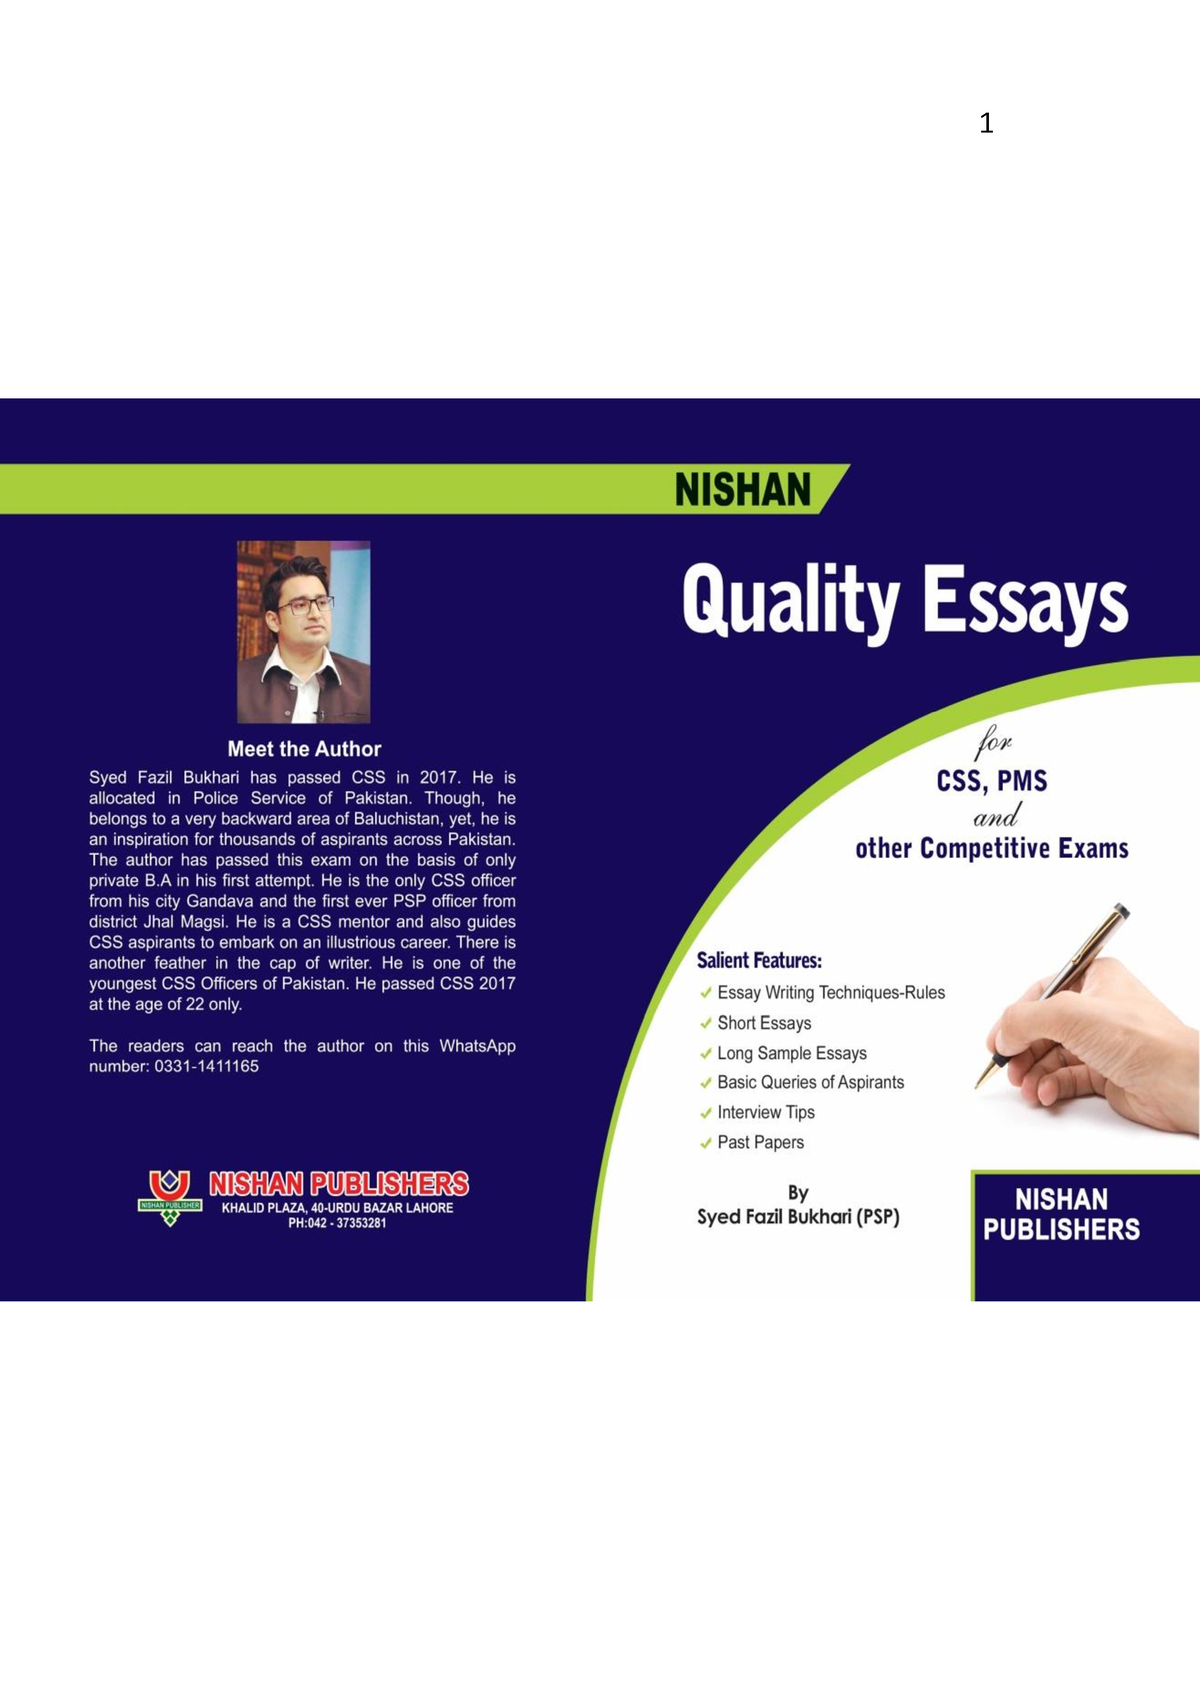 quality essay by syed fazil bukhari pdf download